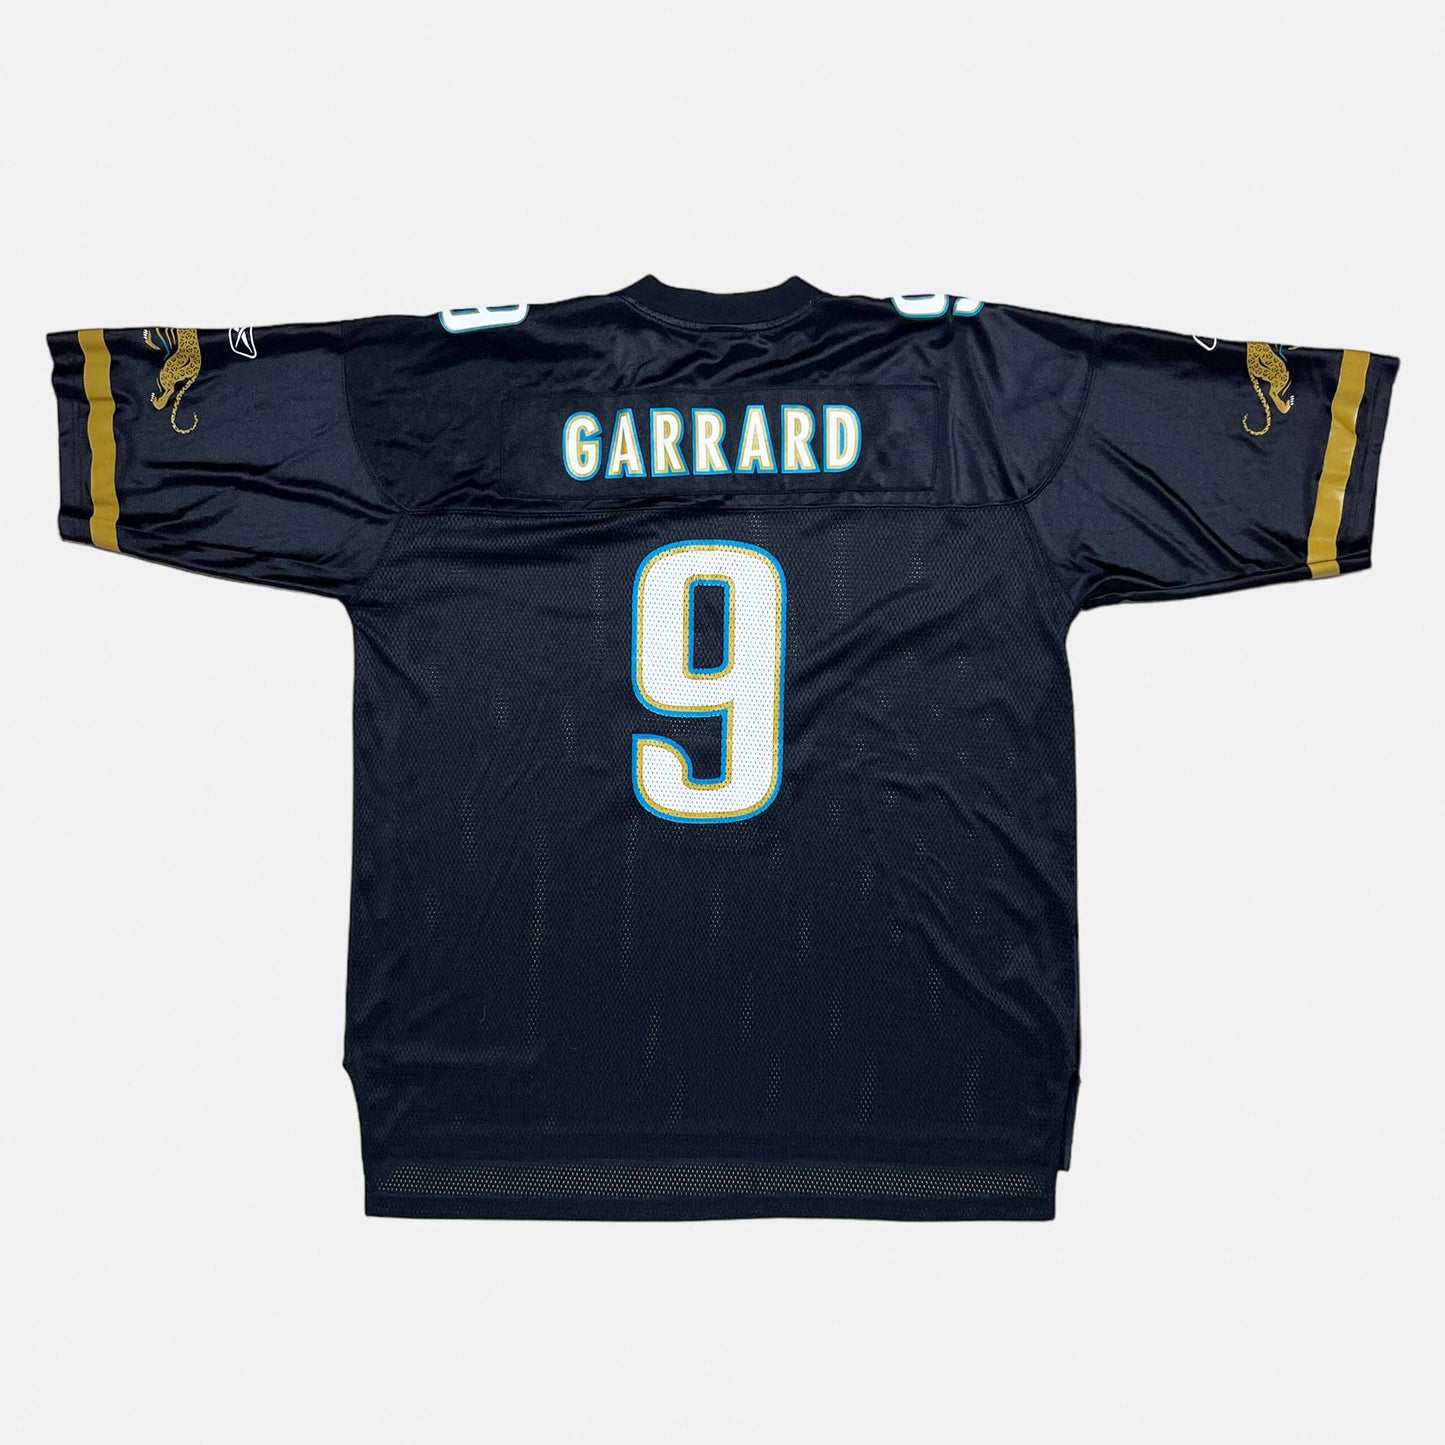 Jacksonville Jaguars - David Garrard - Größe XXL - Reebok - NFL Trikot